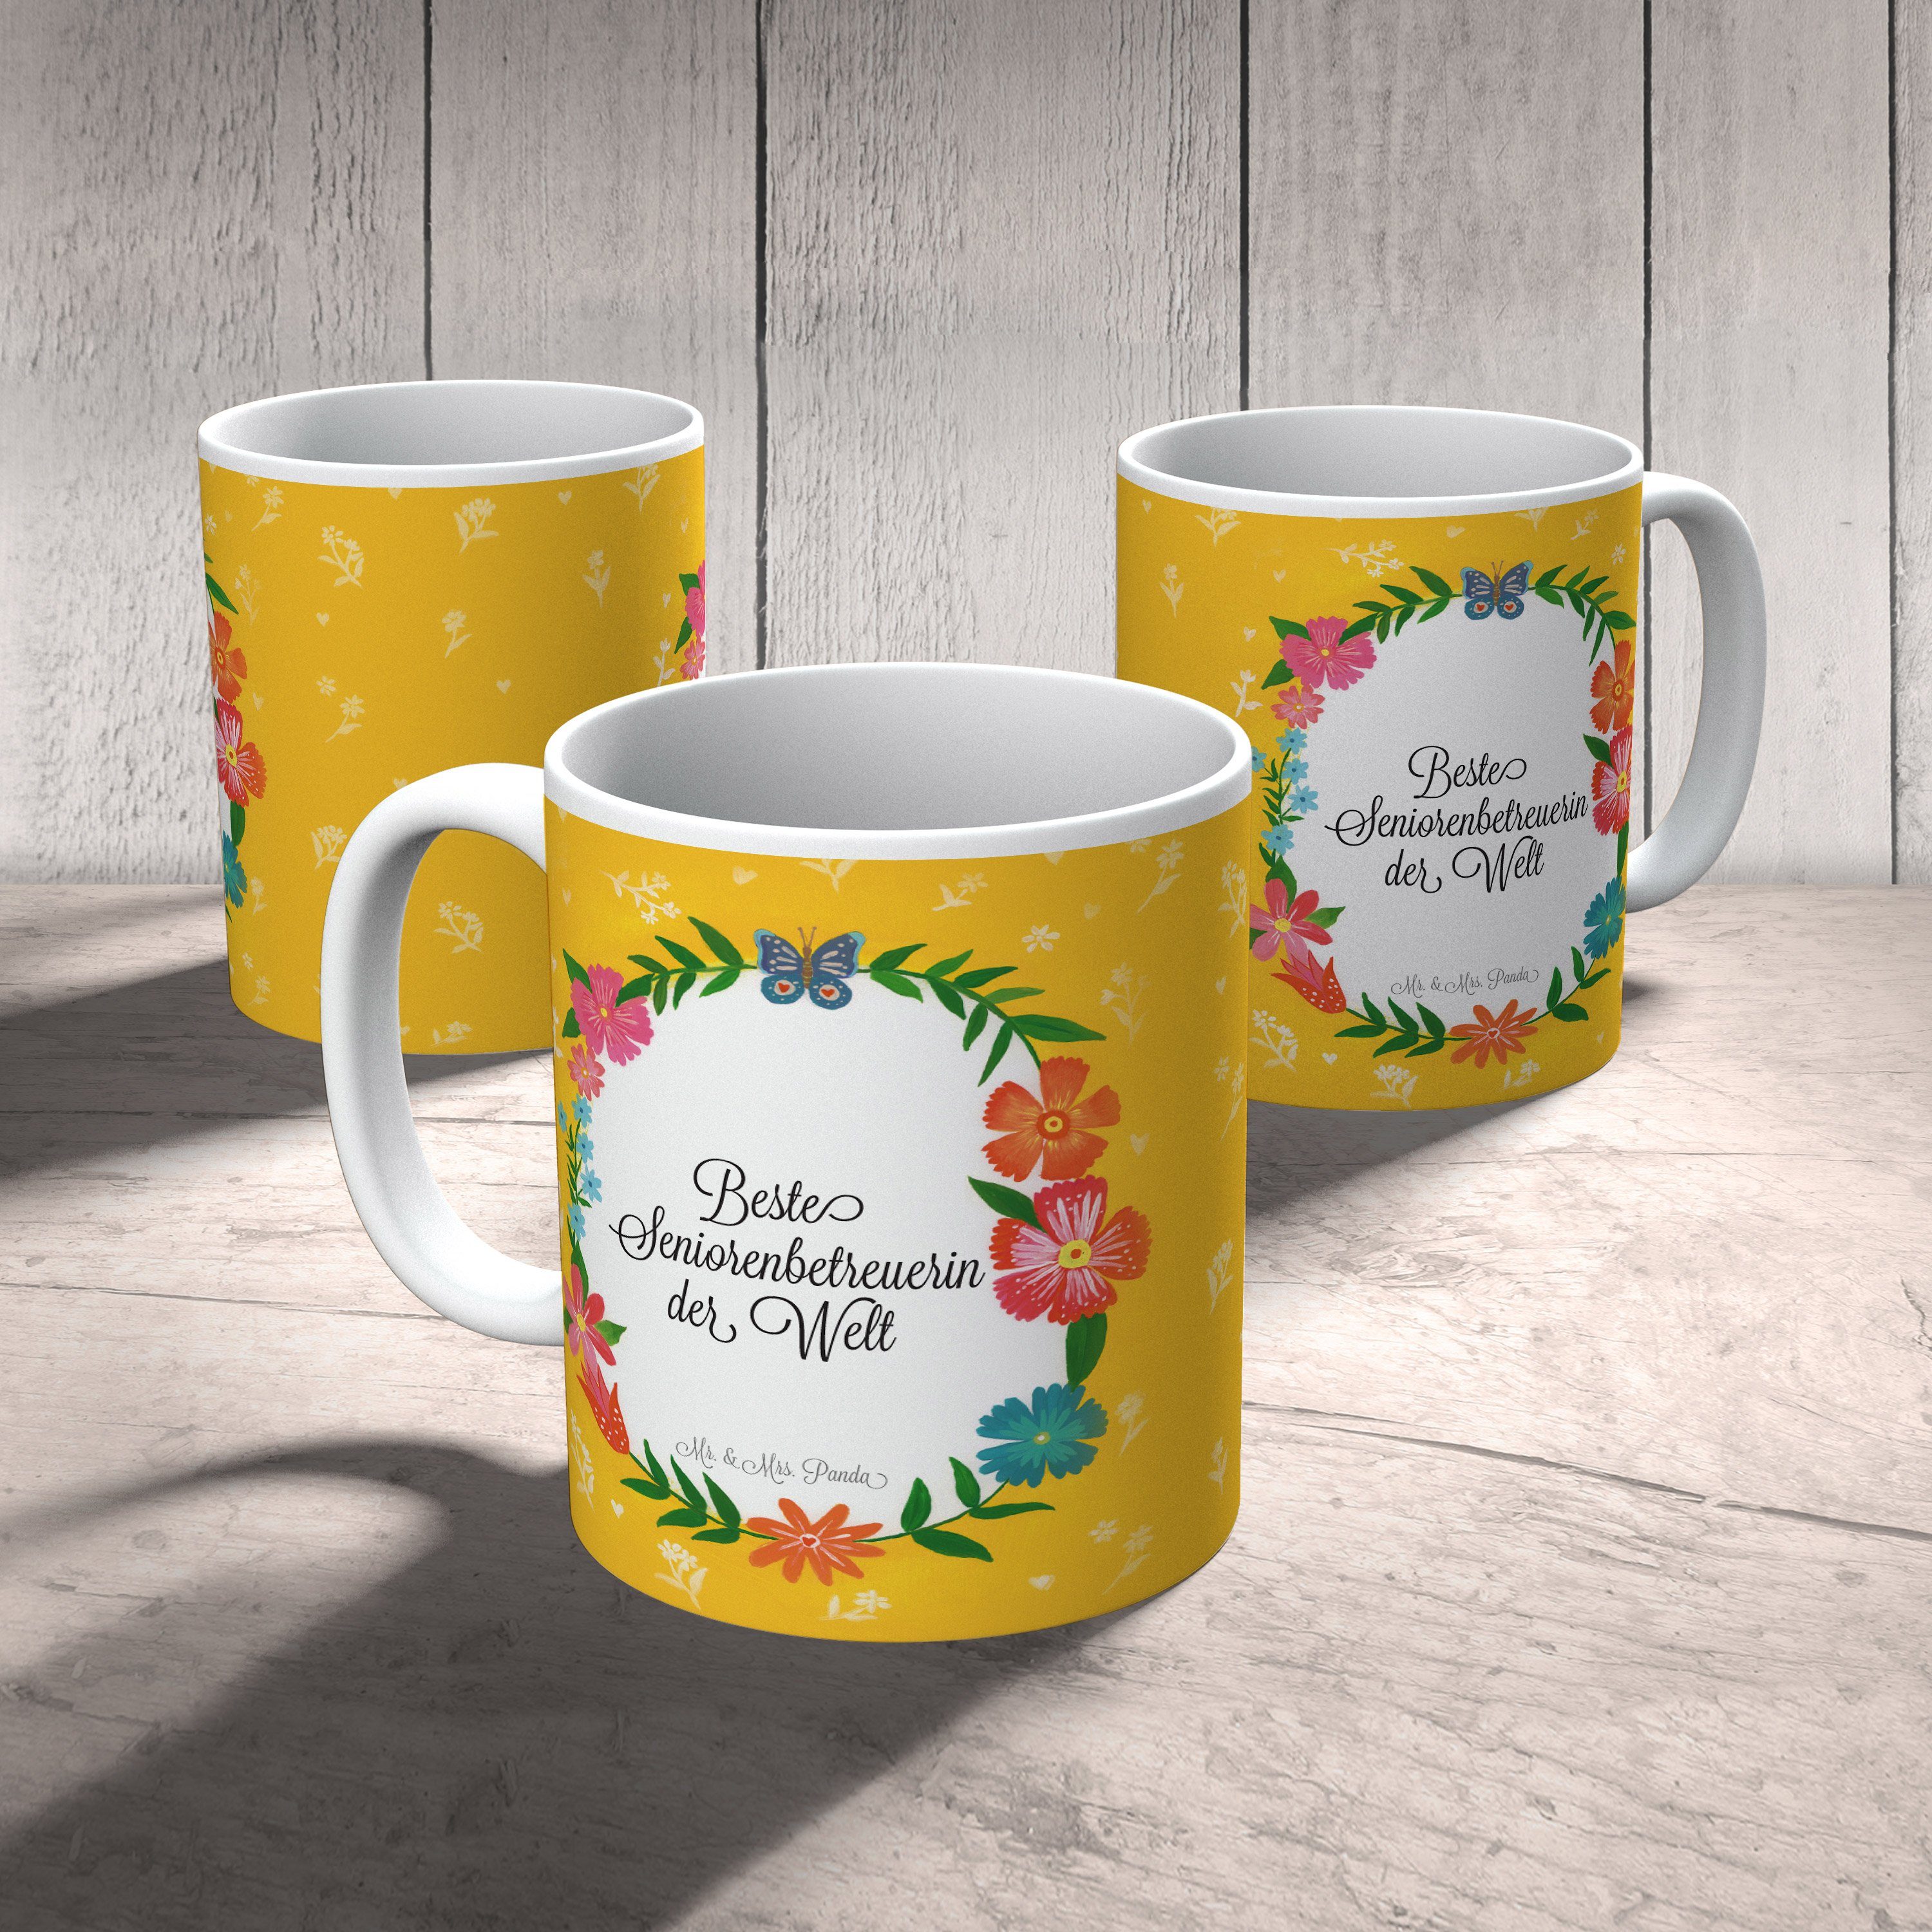 Keramik & Panda Tasse, Seniorenbetreuerin Tasse Mrs. - Mr. Bachelor, S, Geschenk, Tasse Kaffeebecher,